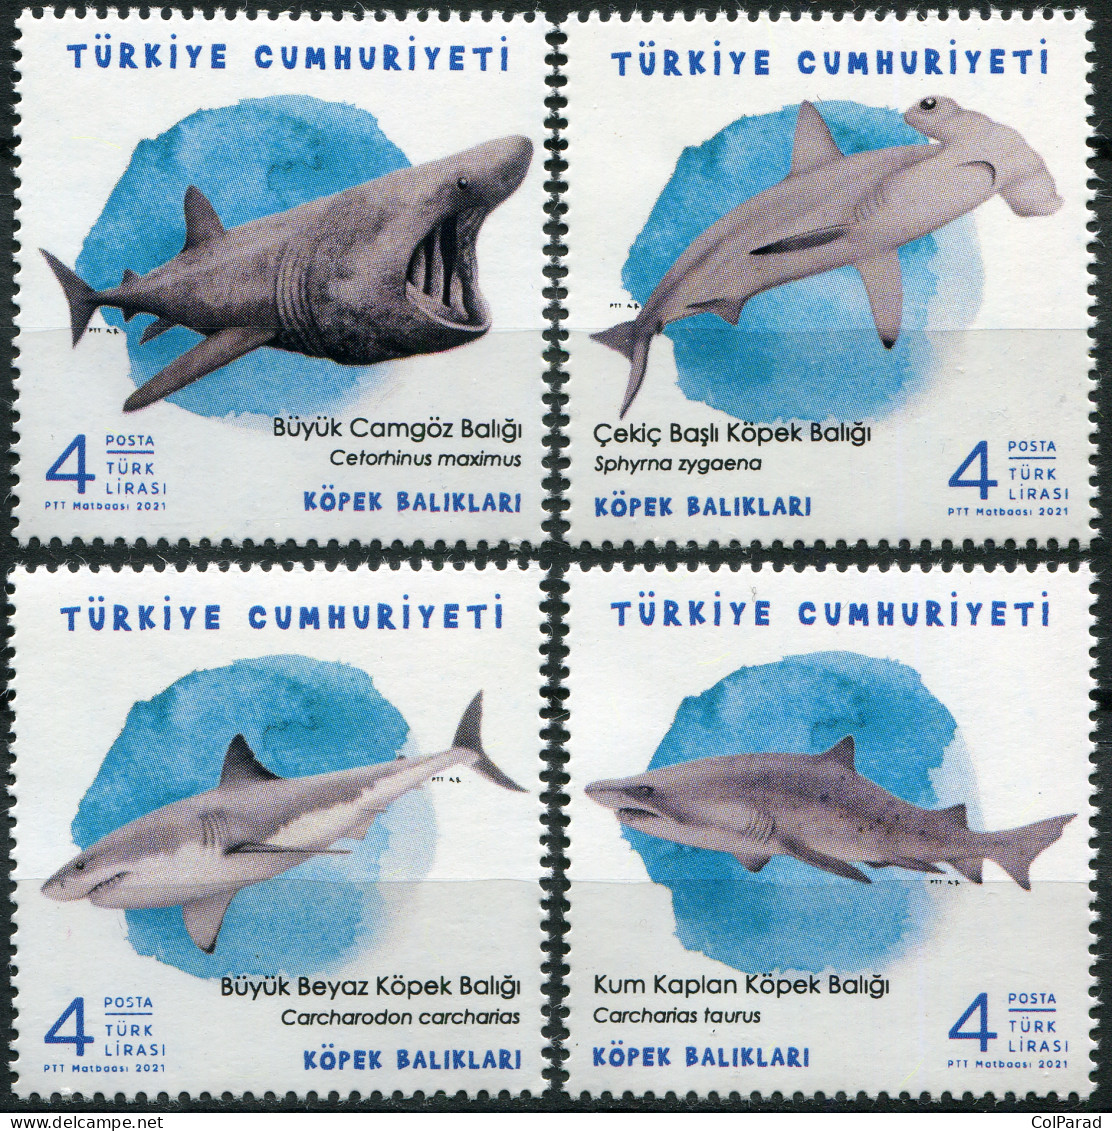 TURKEY - 2021 - SET OF 4 STAMPS MNH ** - Sharks - Unused Stamps